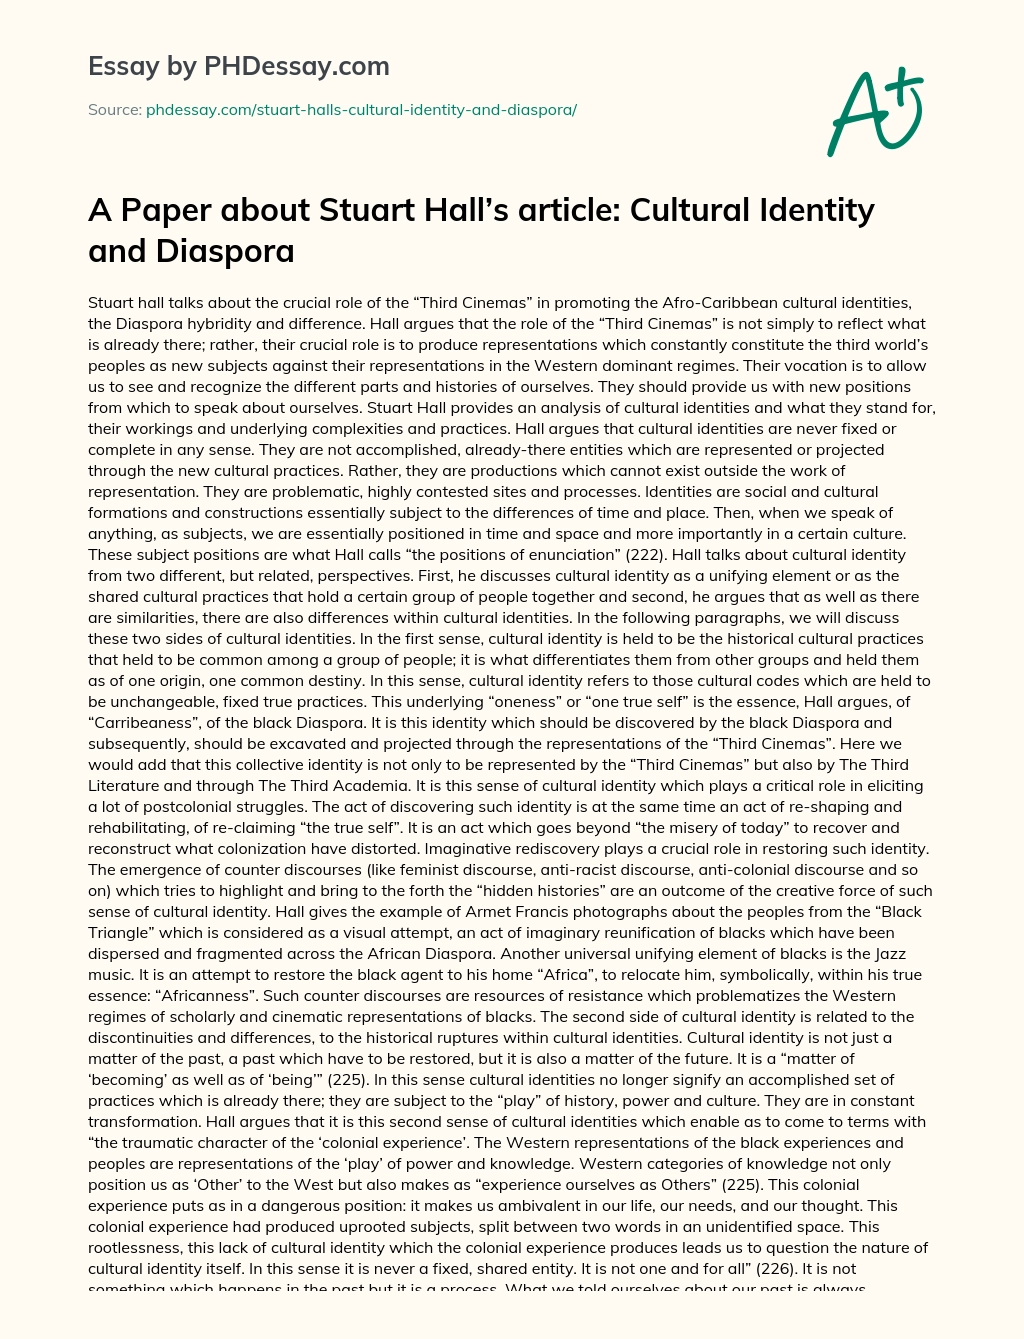 A Paper about Stuart Hall’s article: Cultural Identity and Diaspora essay